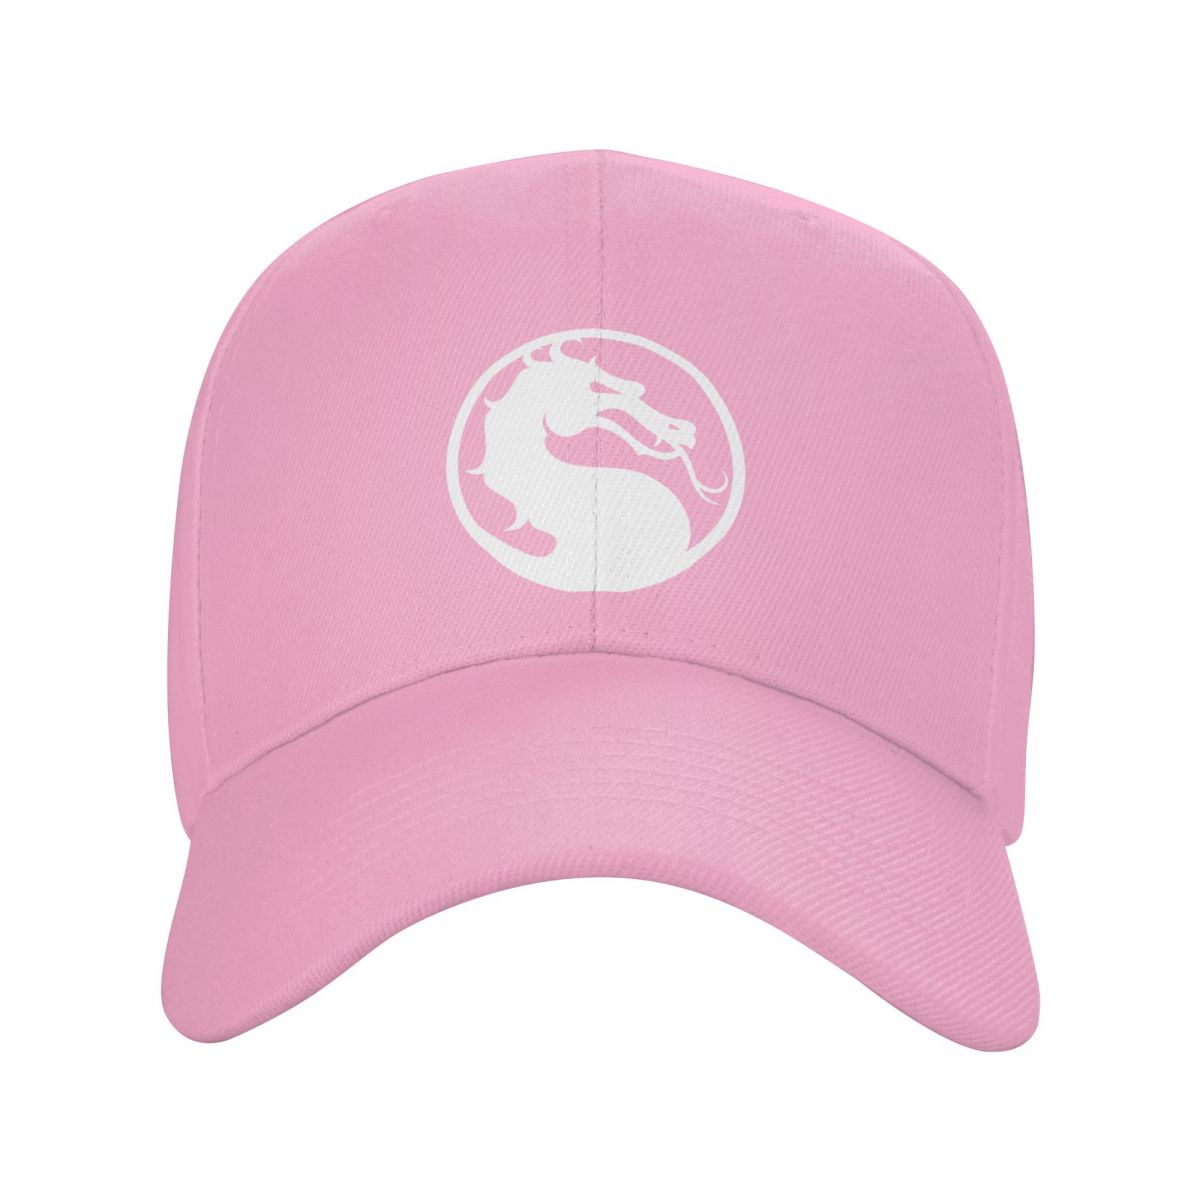 Mortal Kombat - Snapback Baseball Cap - Summer Hat For Men and Women-Pink-Adjustable Cap-